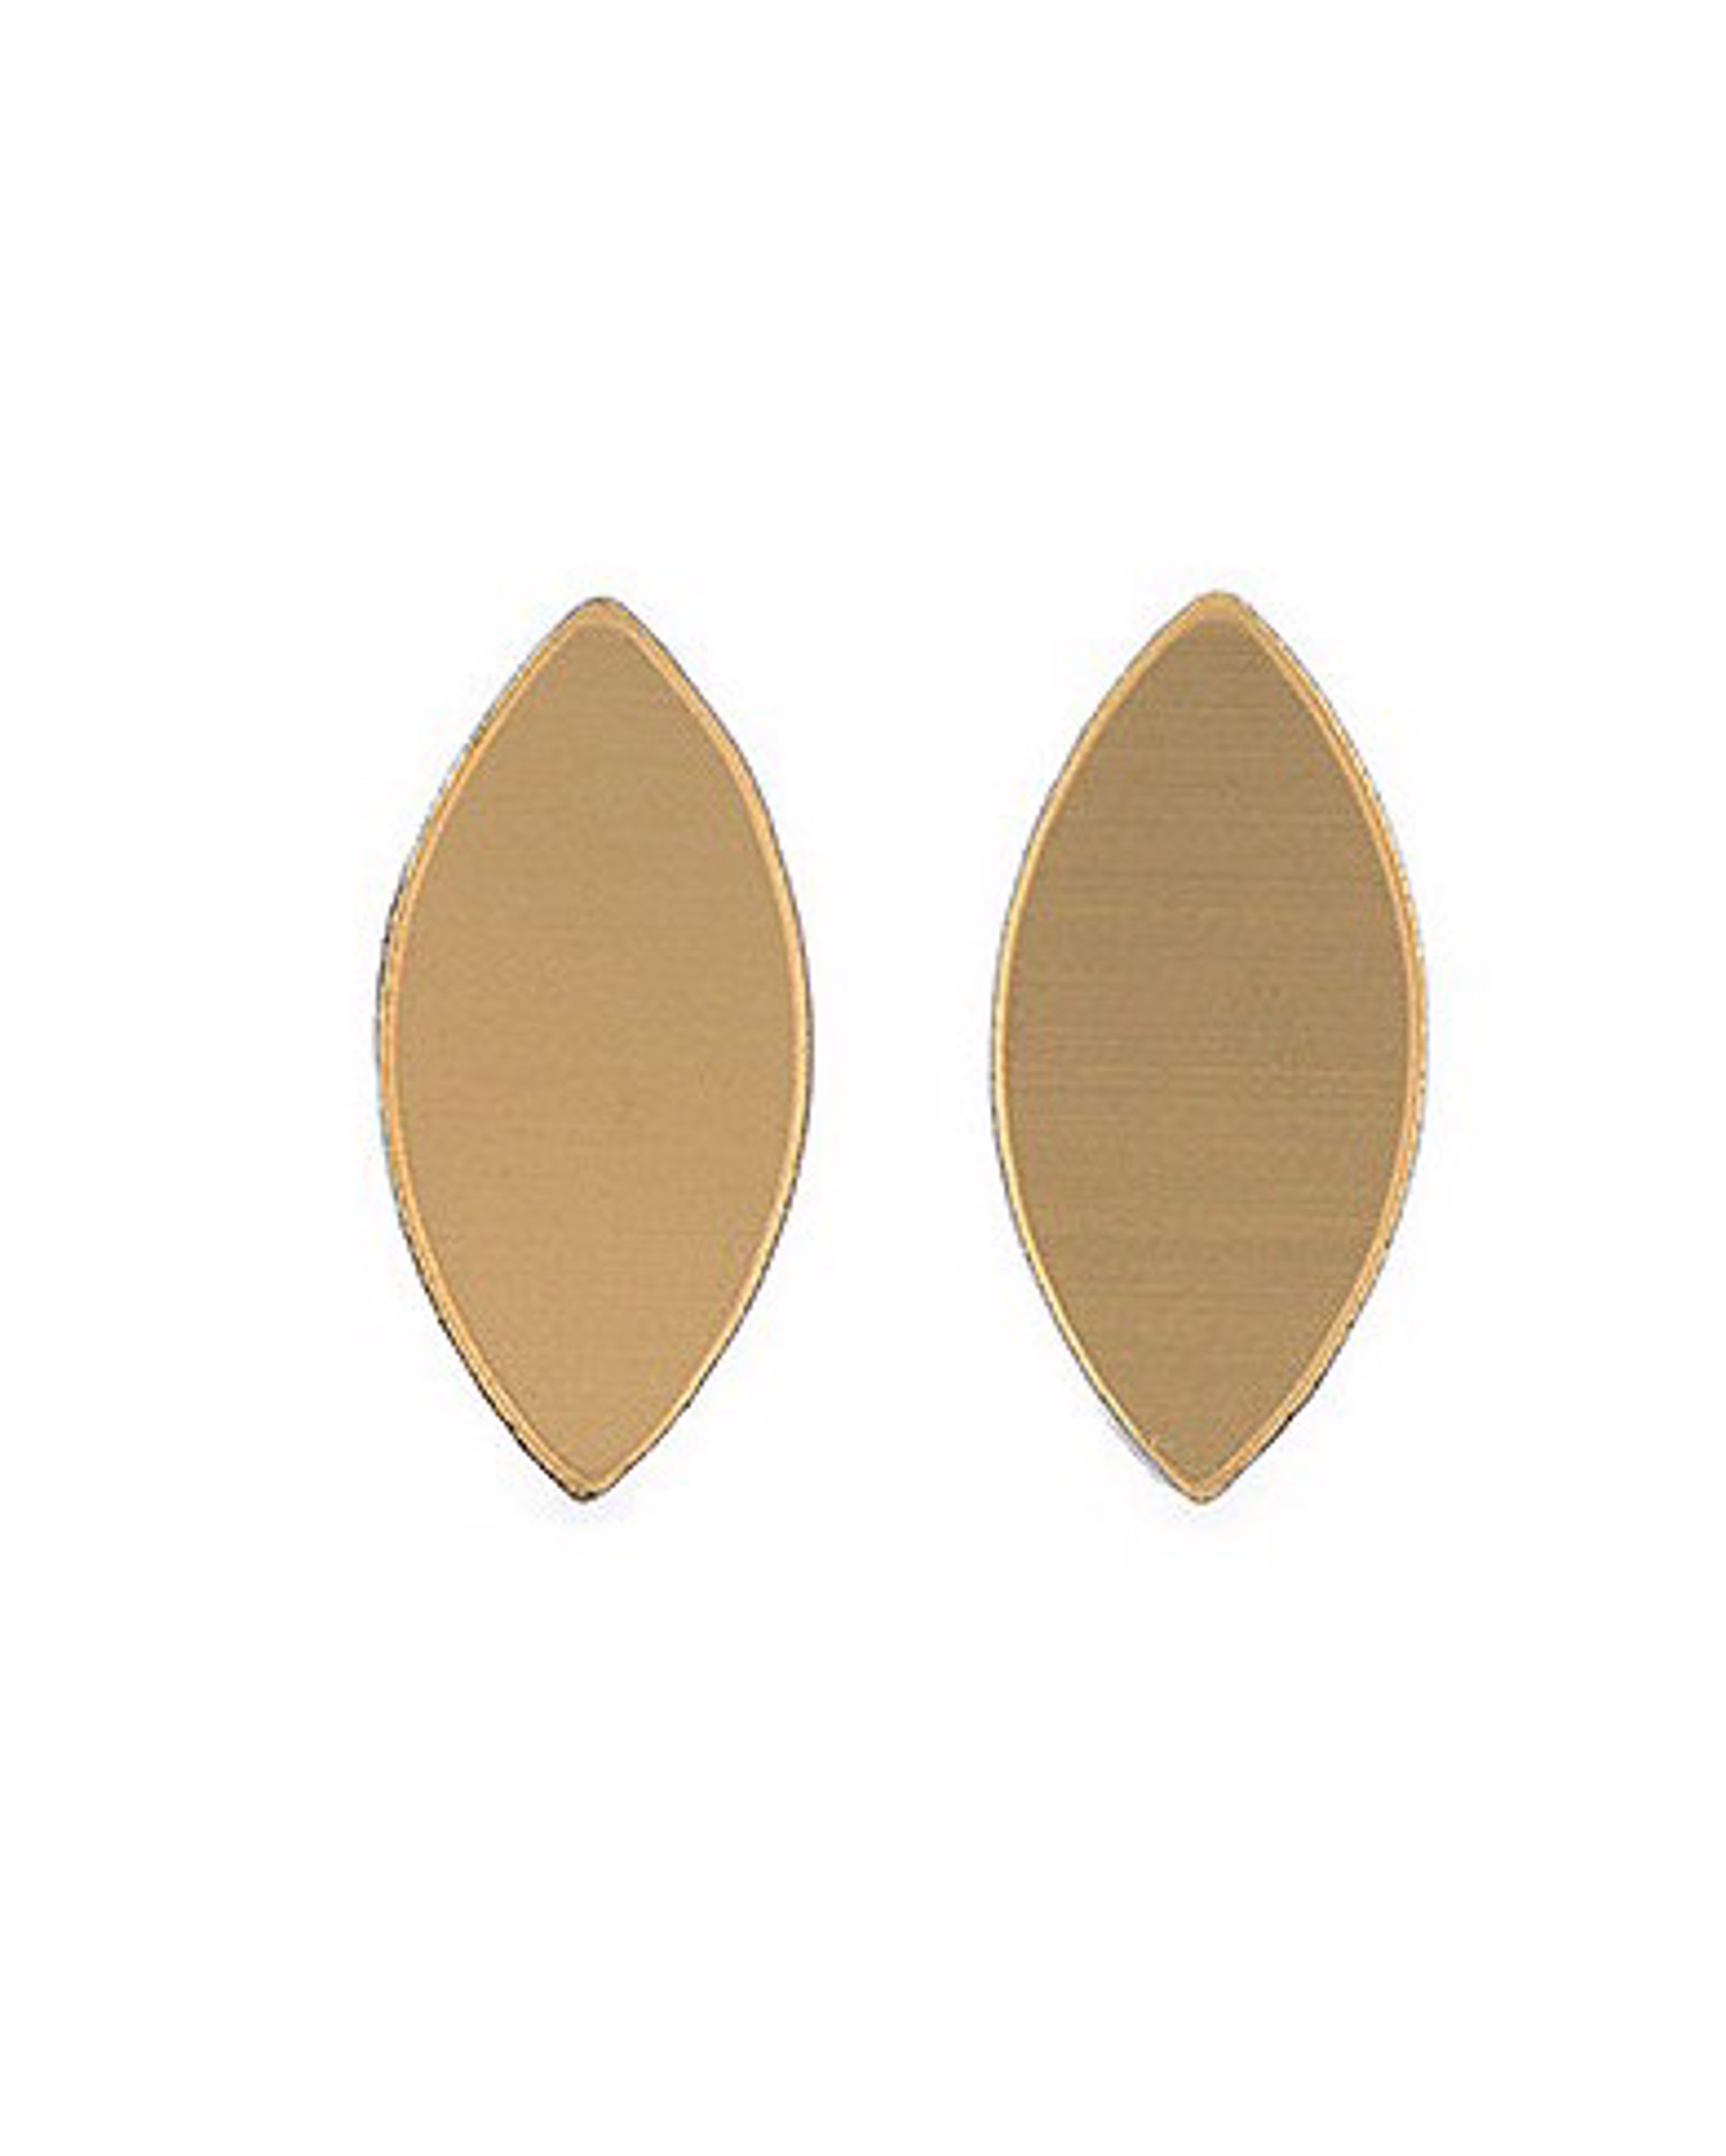 Kate Single Leaf Earring Silver-Gold by ISKIN Nikaia Inc.